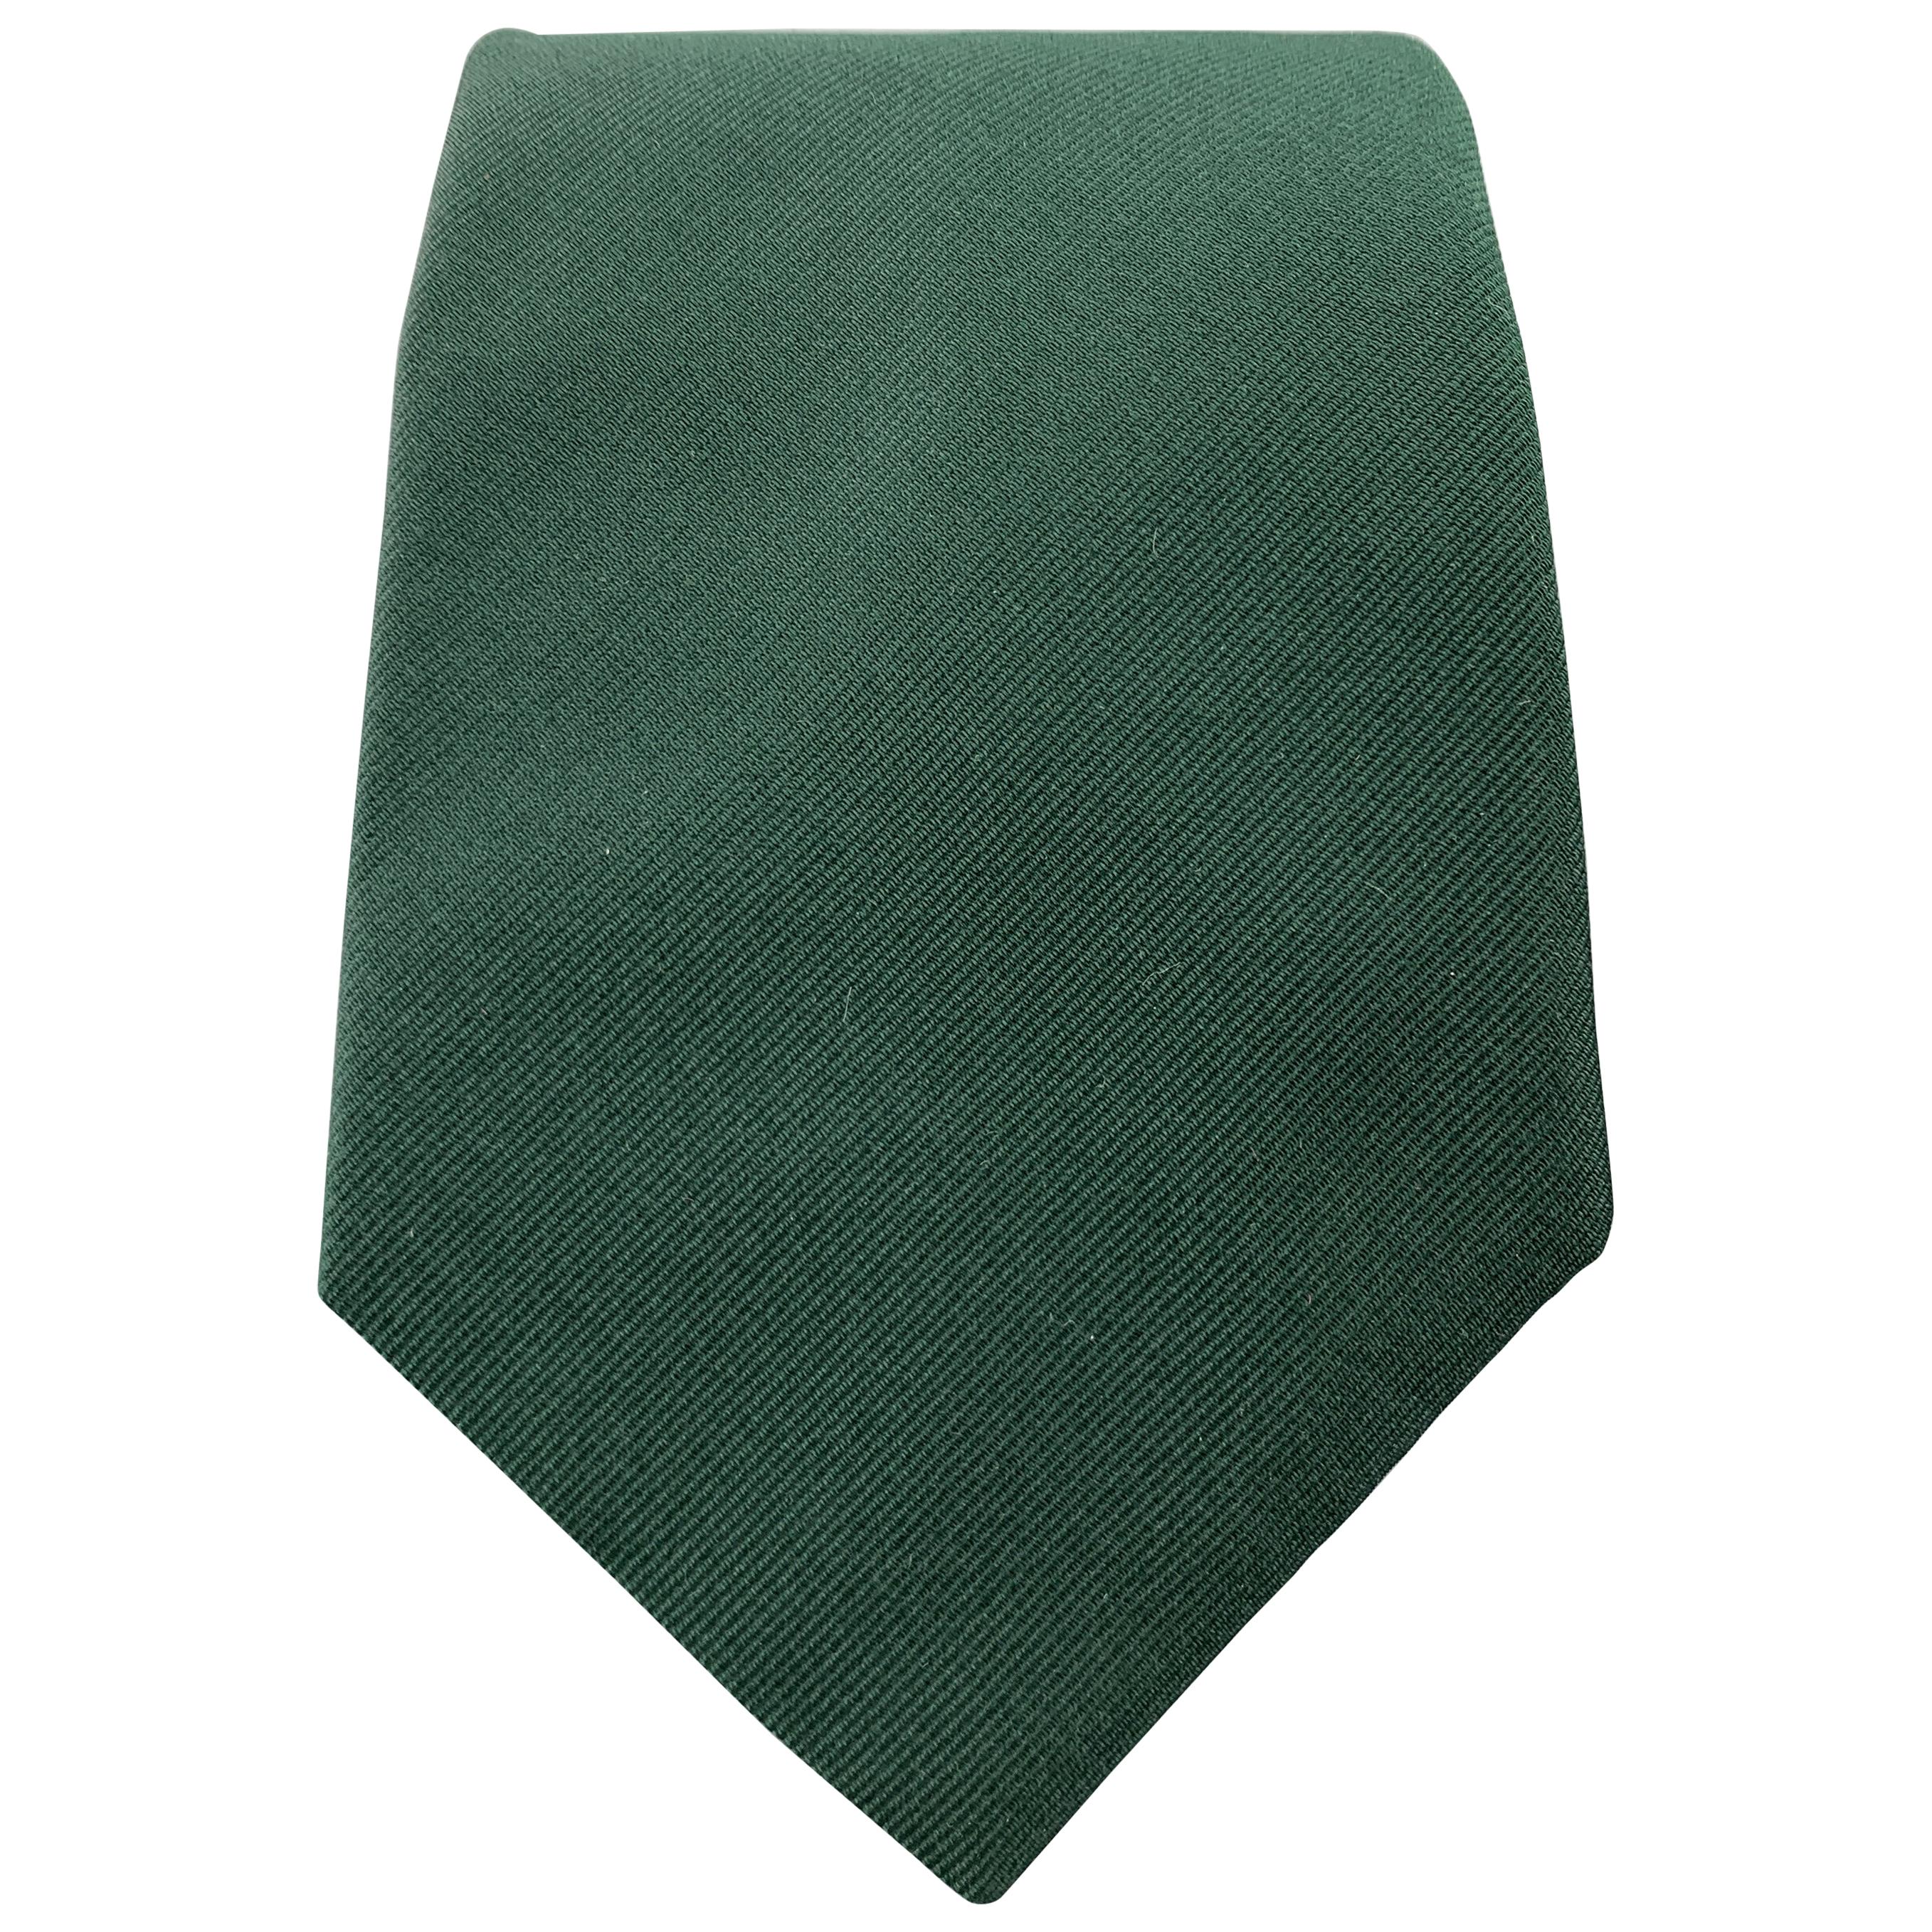 POLO RALPH LAUREN Solid Forest Green Silk Twill Tie